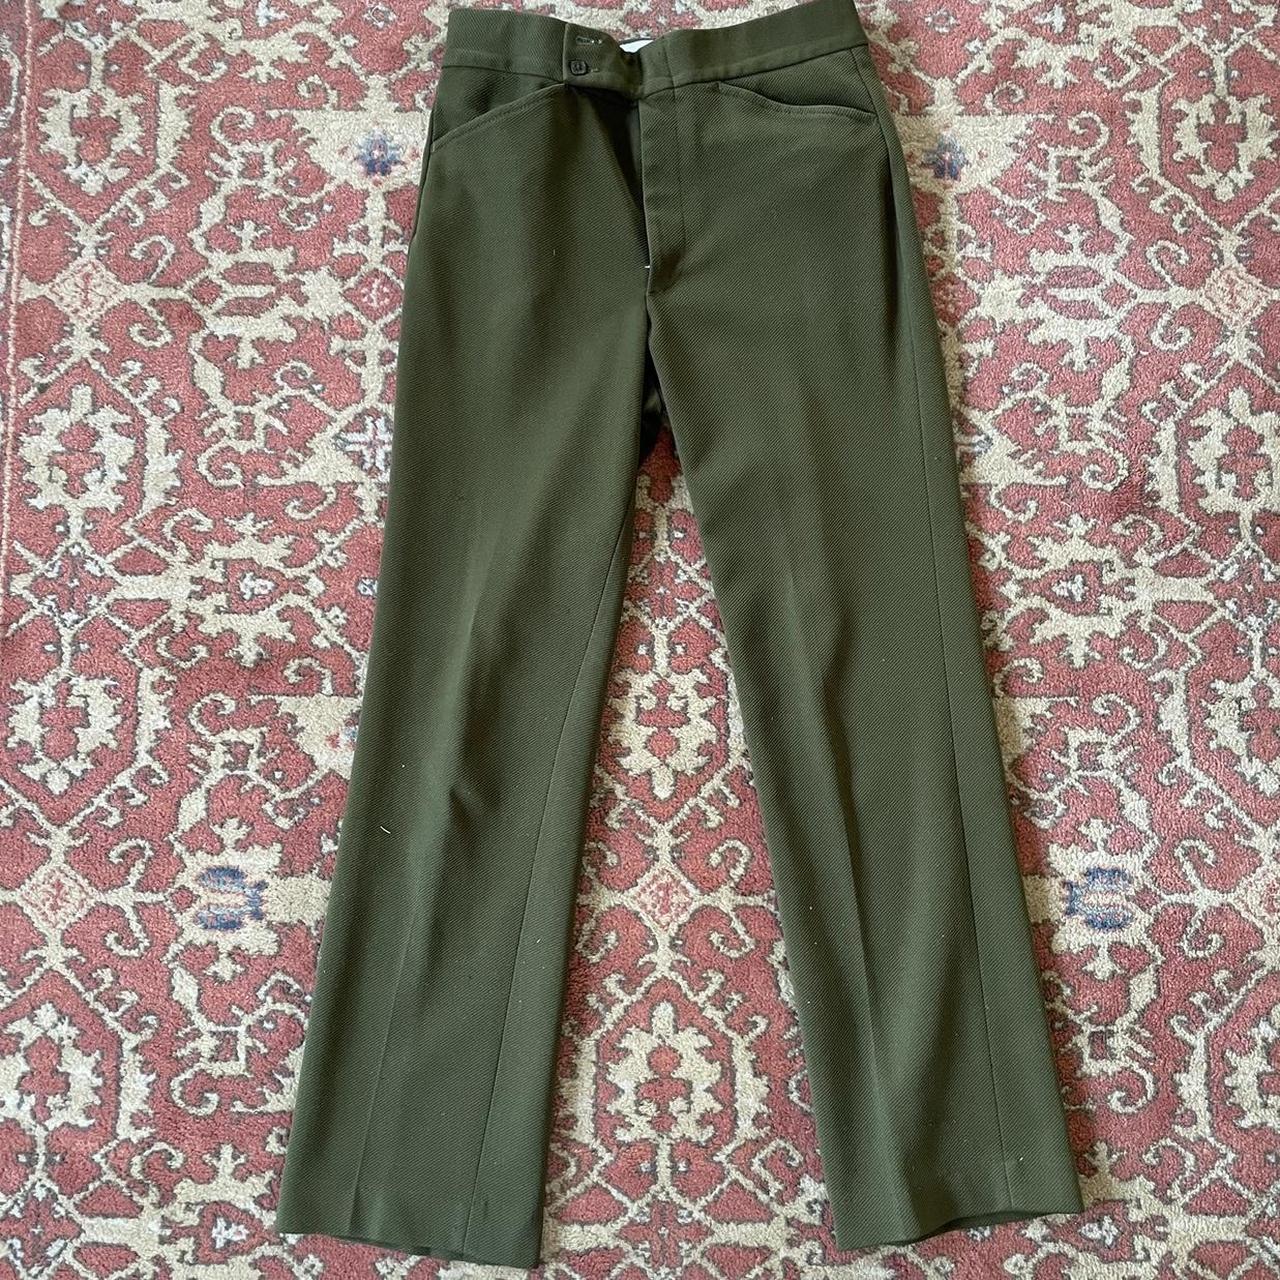 Farah Men's Green and Khaki Trousers